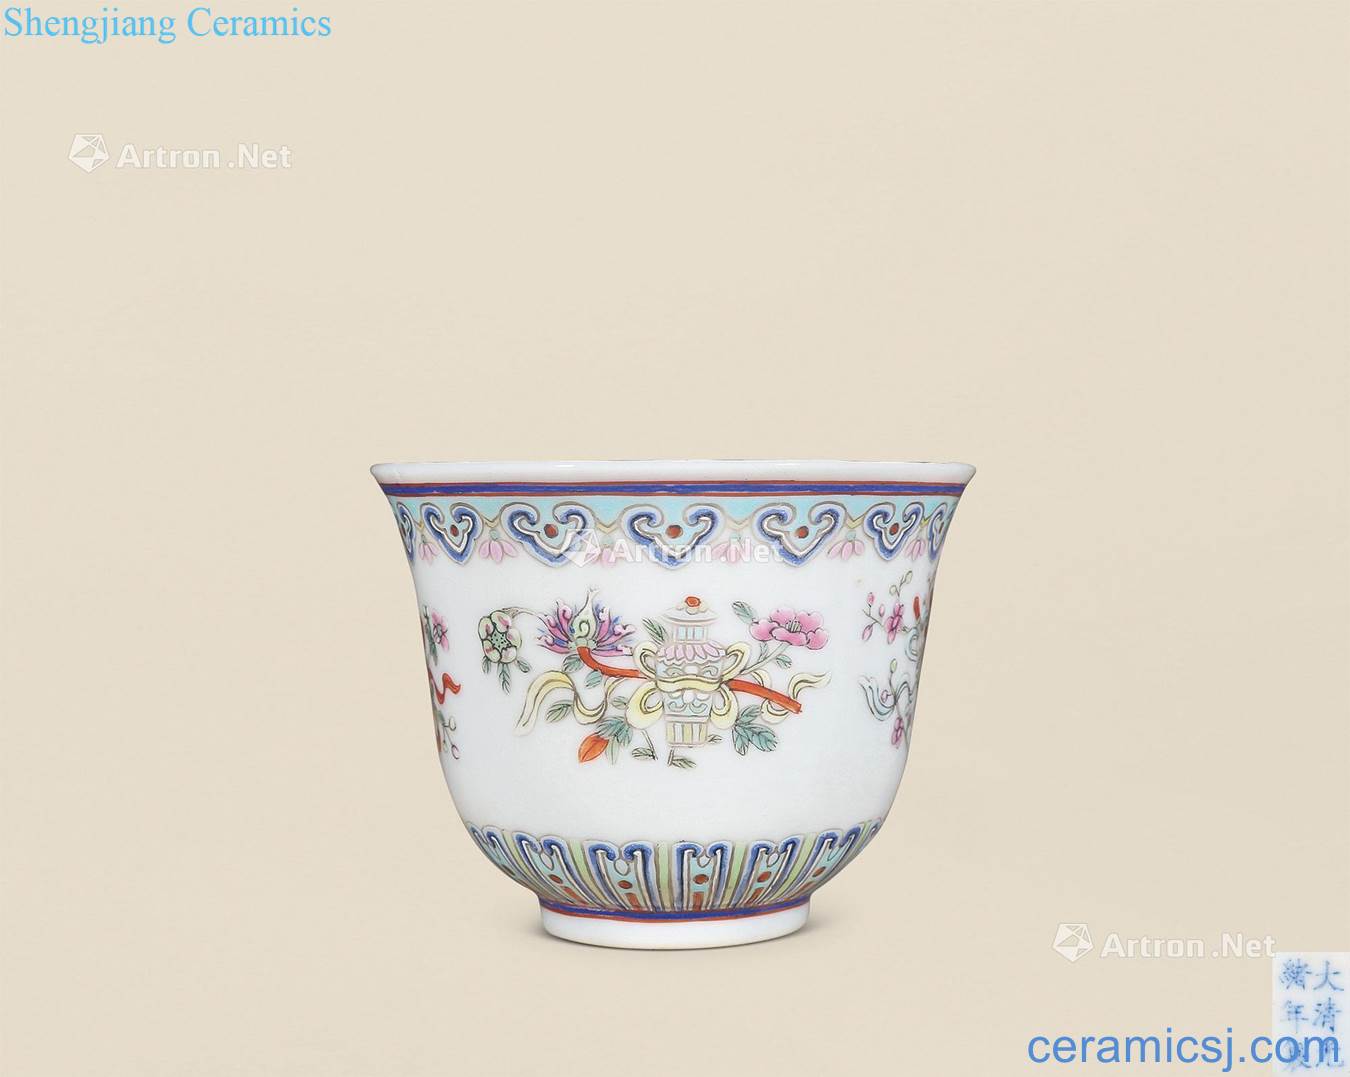 Pastel sweet grain reign of qing emperor guangxu cup